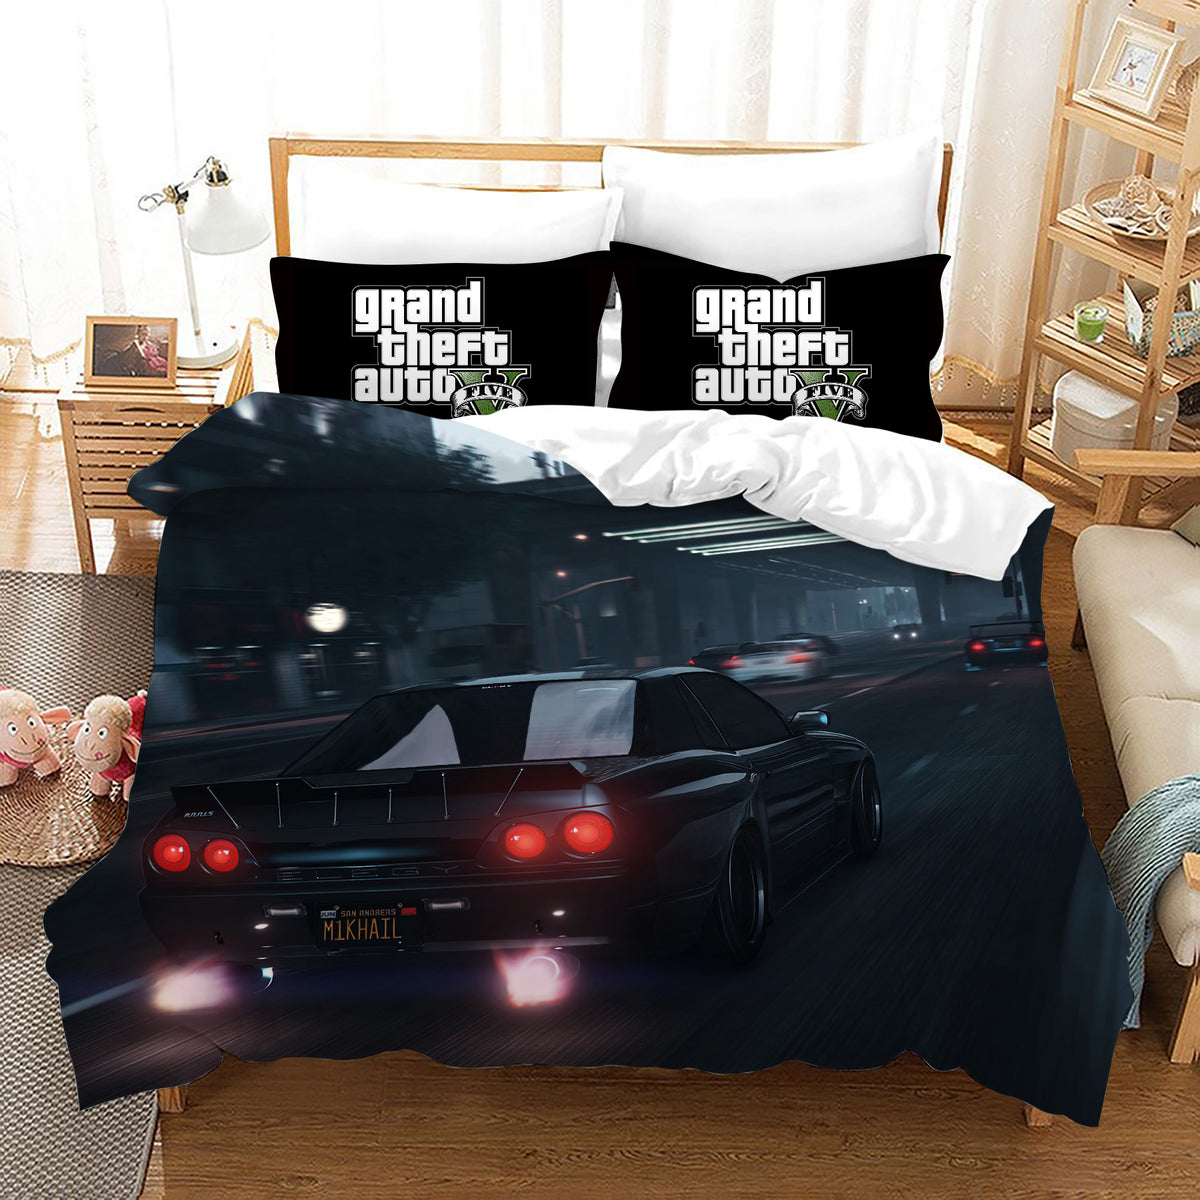 Grand Theft Auto #21 Duvet Cover Quilt Cover Pillowcase Bedding Set Bed Linen Home Decor